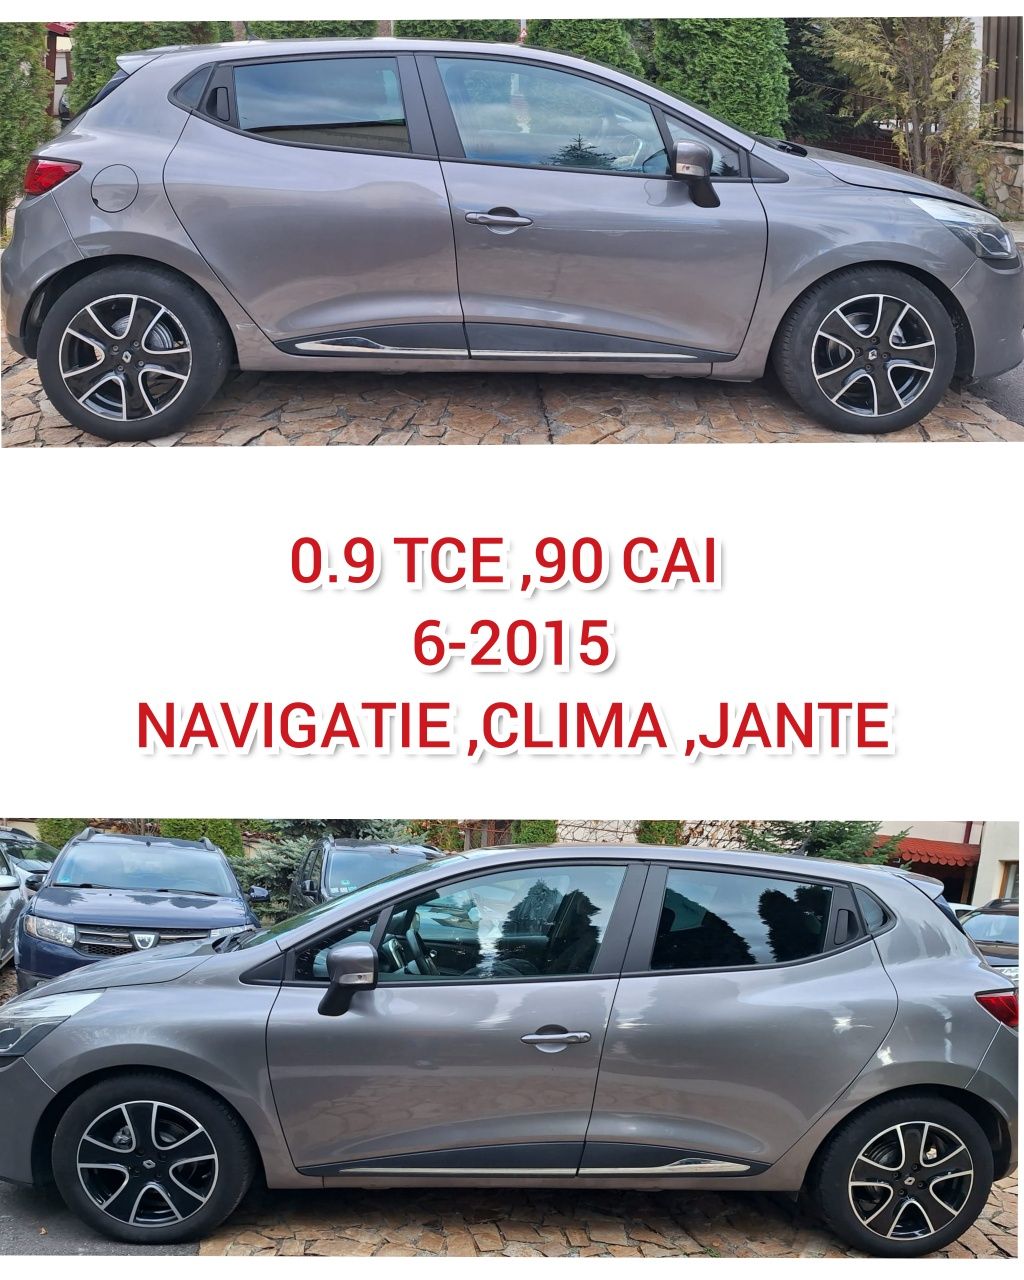 CLIO 4 ,0.9TCE,90 cai, panorama ,aer conditionat ,posibilitate rate